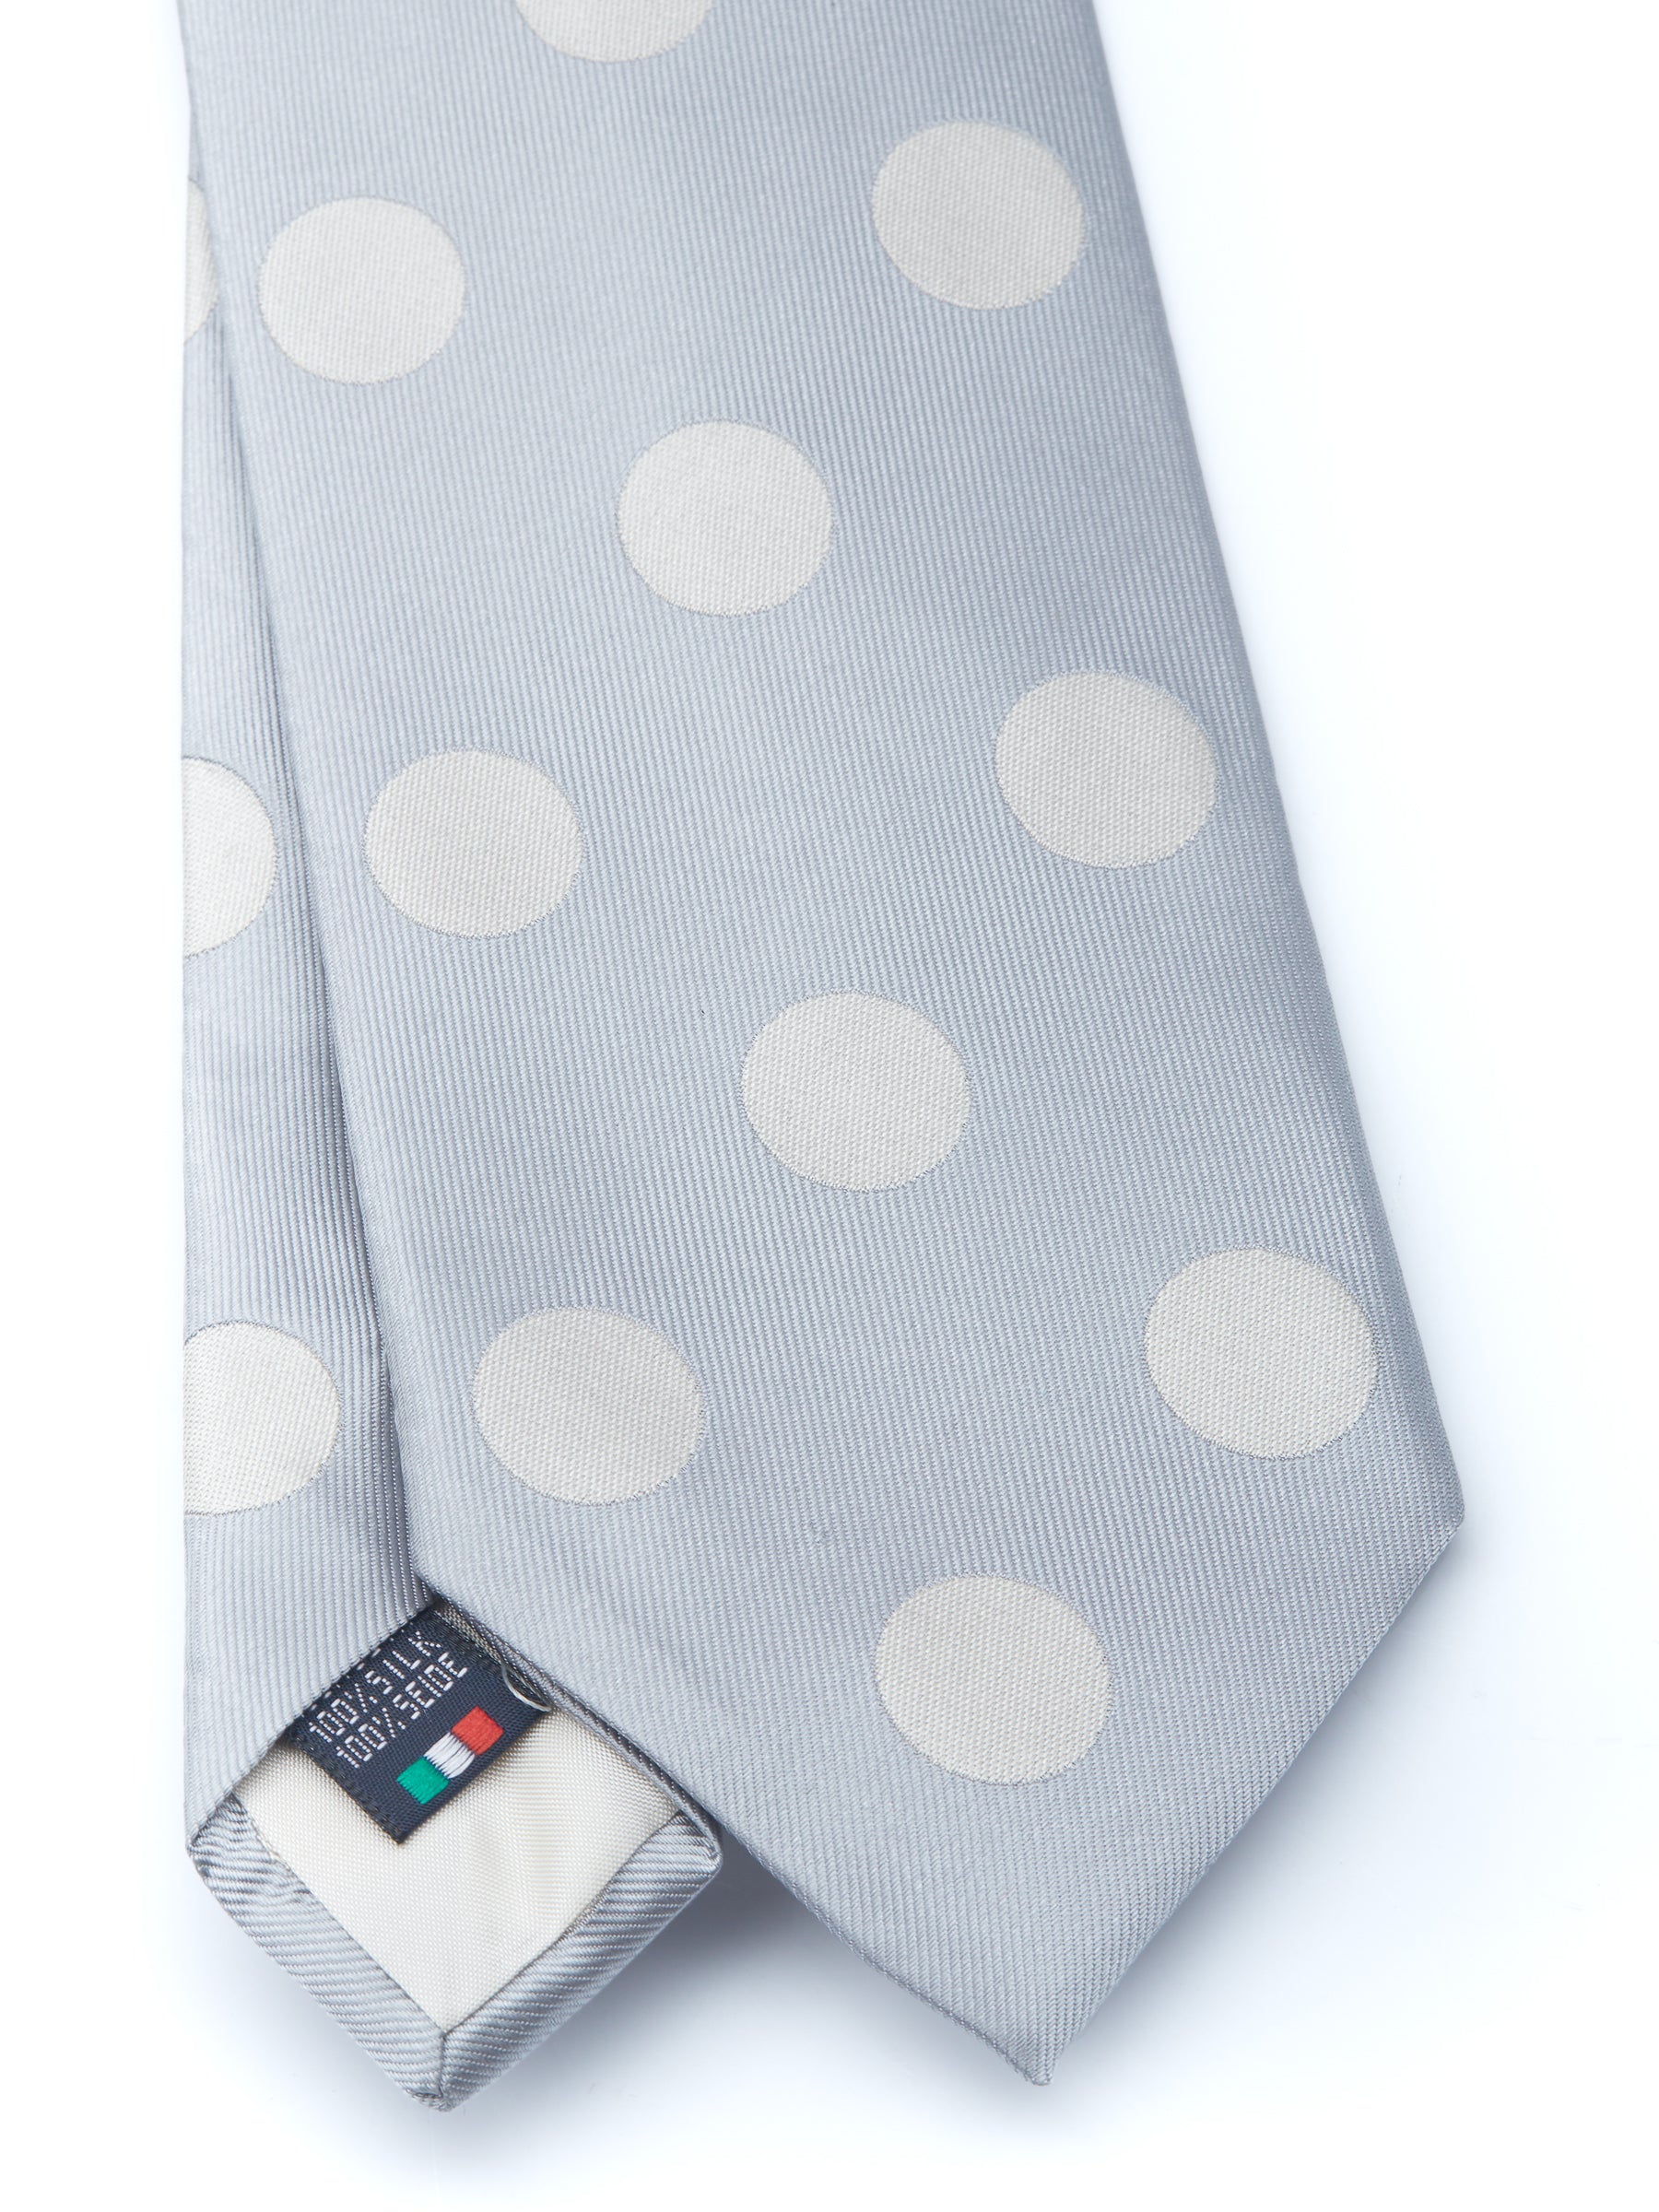 Cambridge Spot Grey/Cream Silk Tie